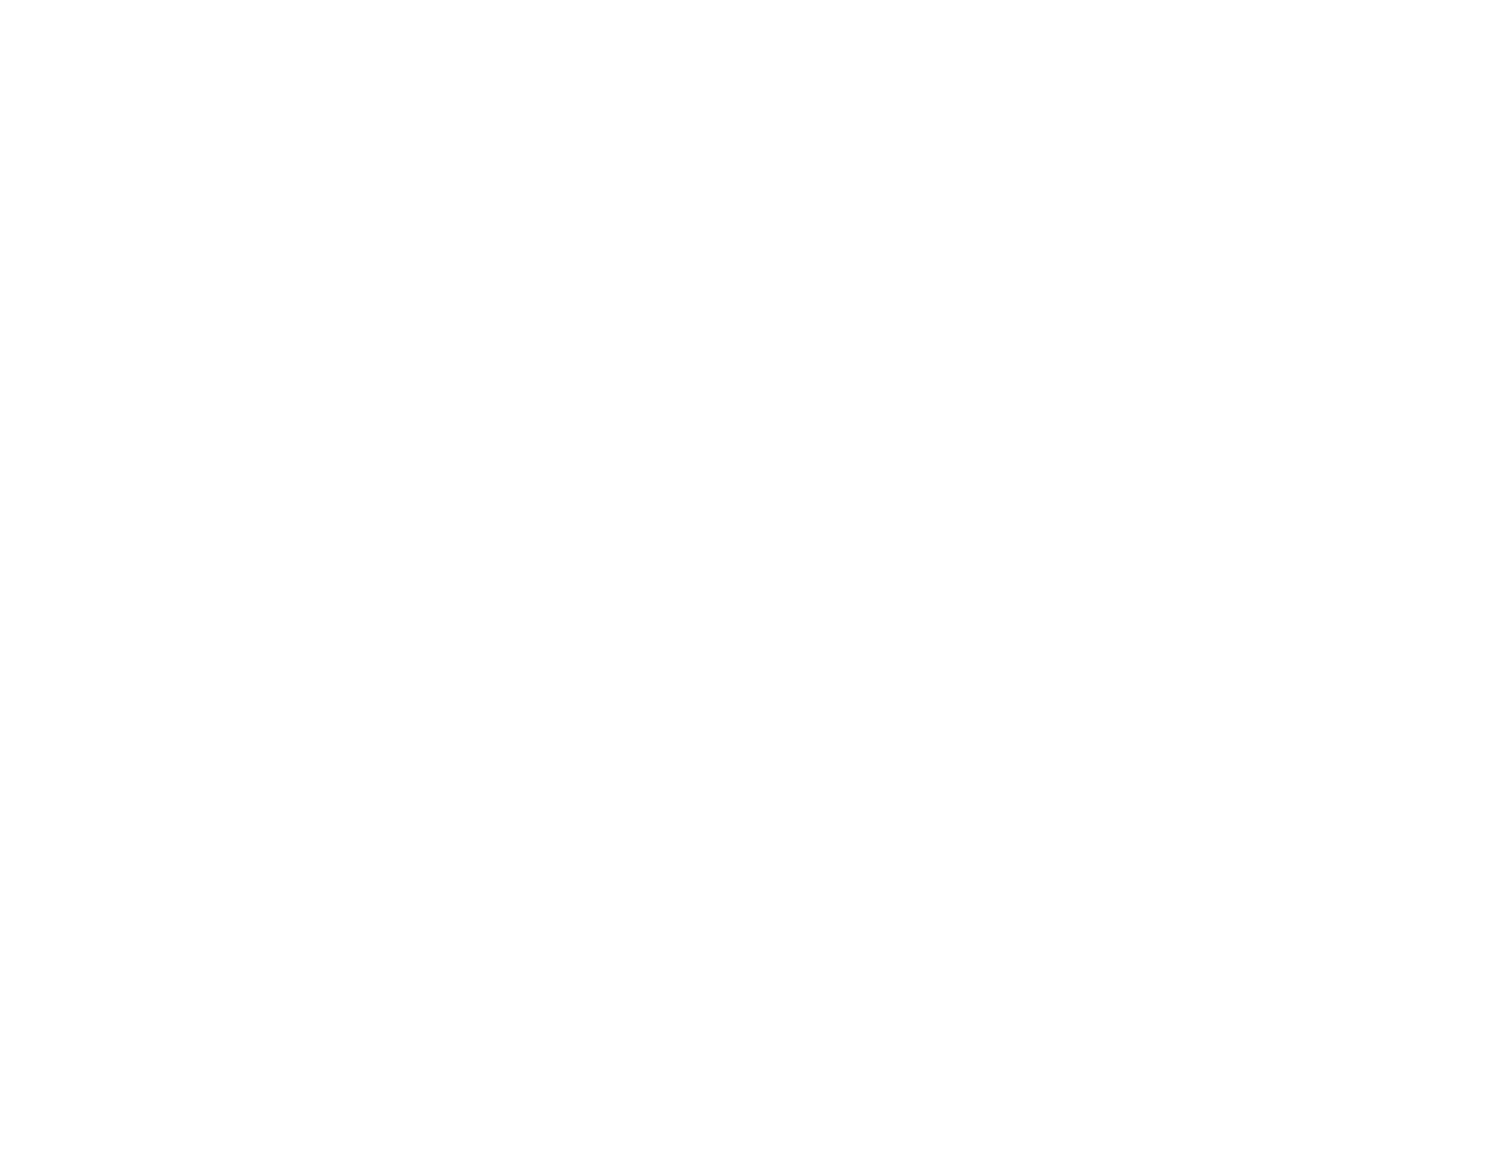 Fifty First Street